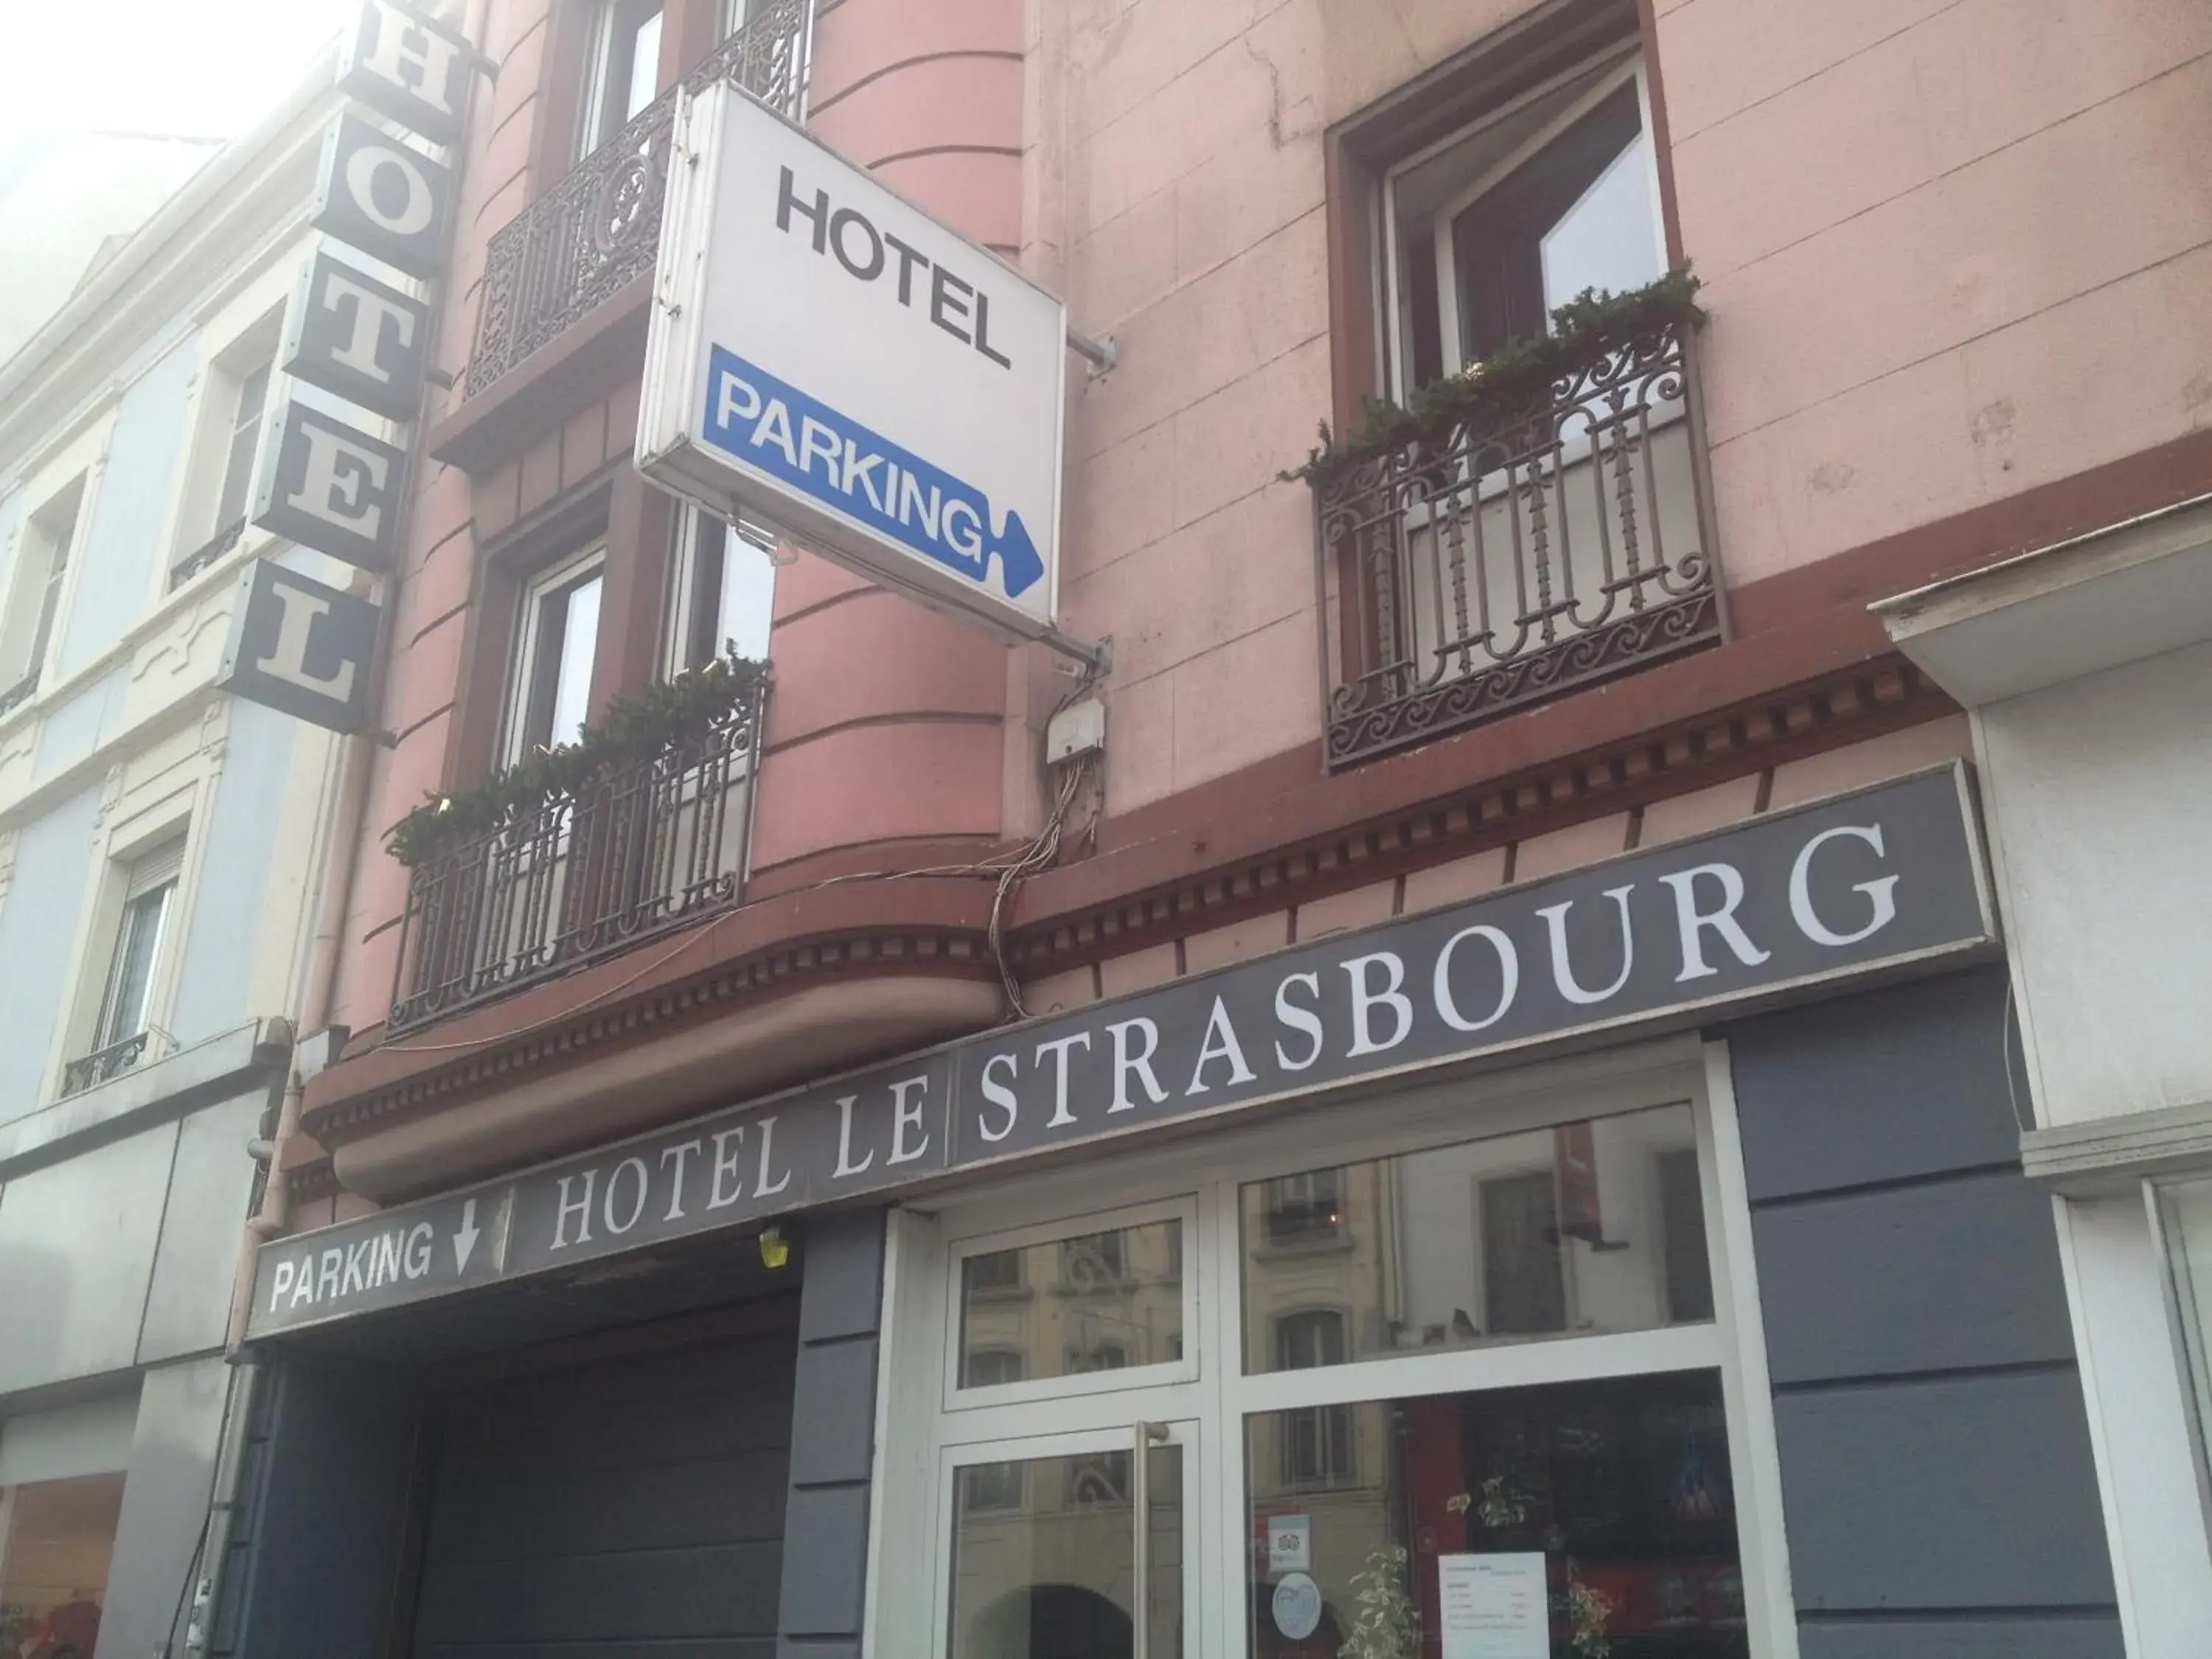 Facade/entrance in Hotel Le Strasbourg